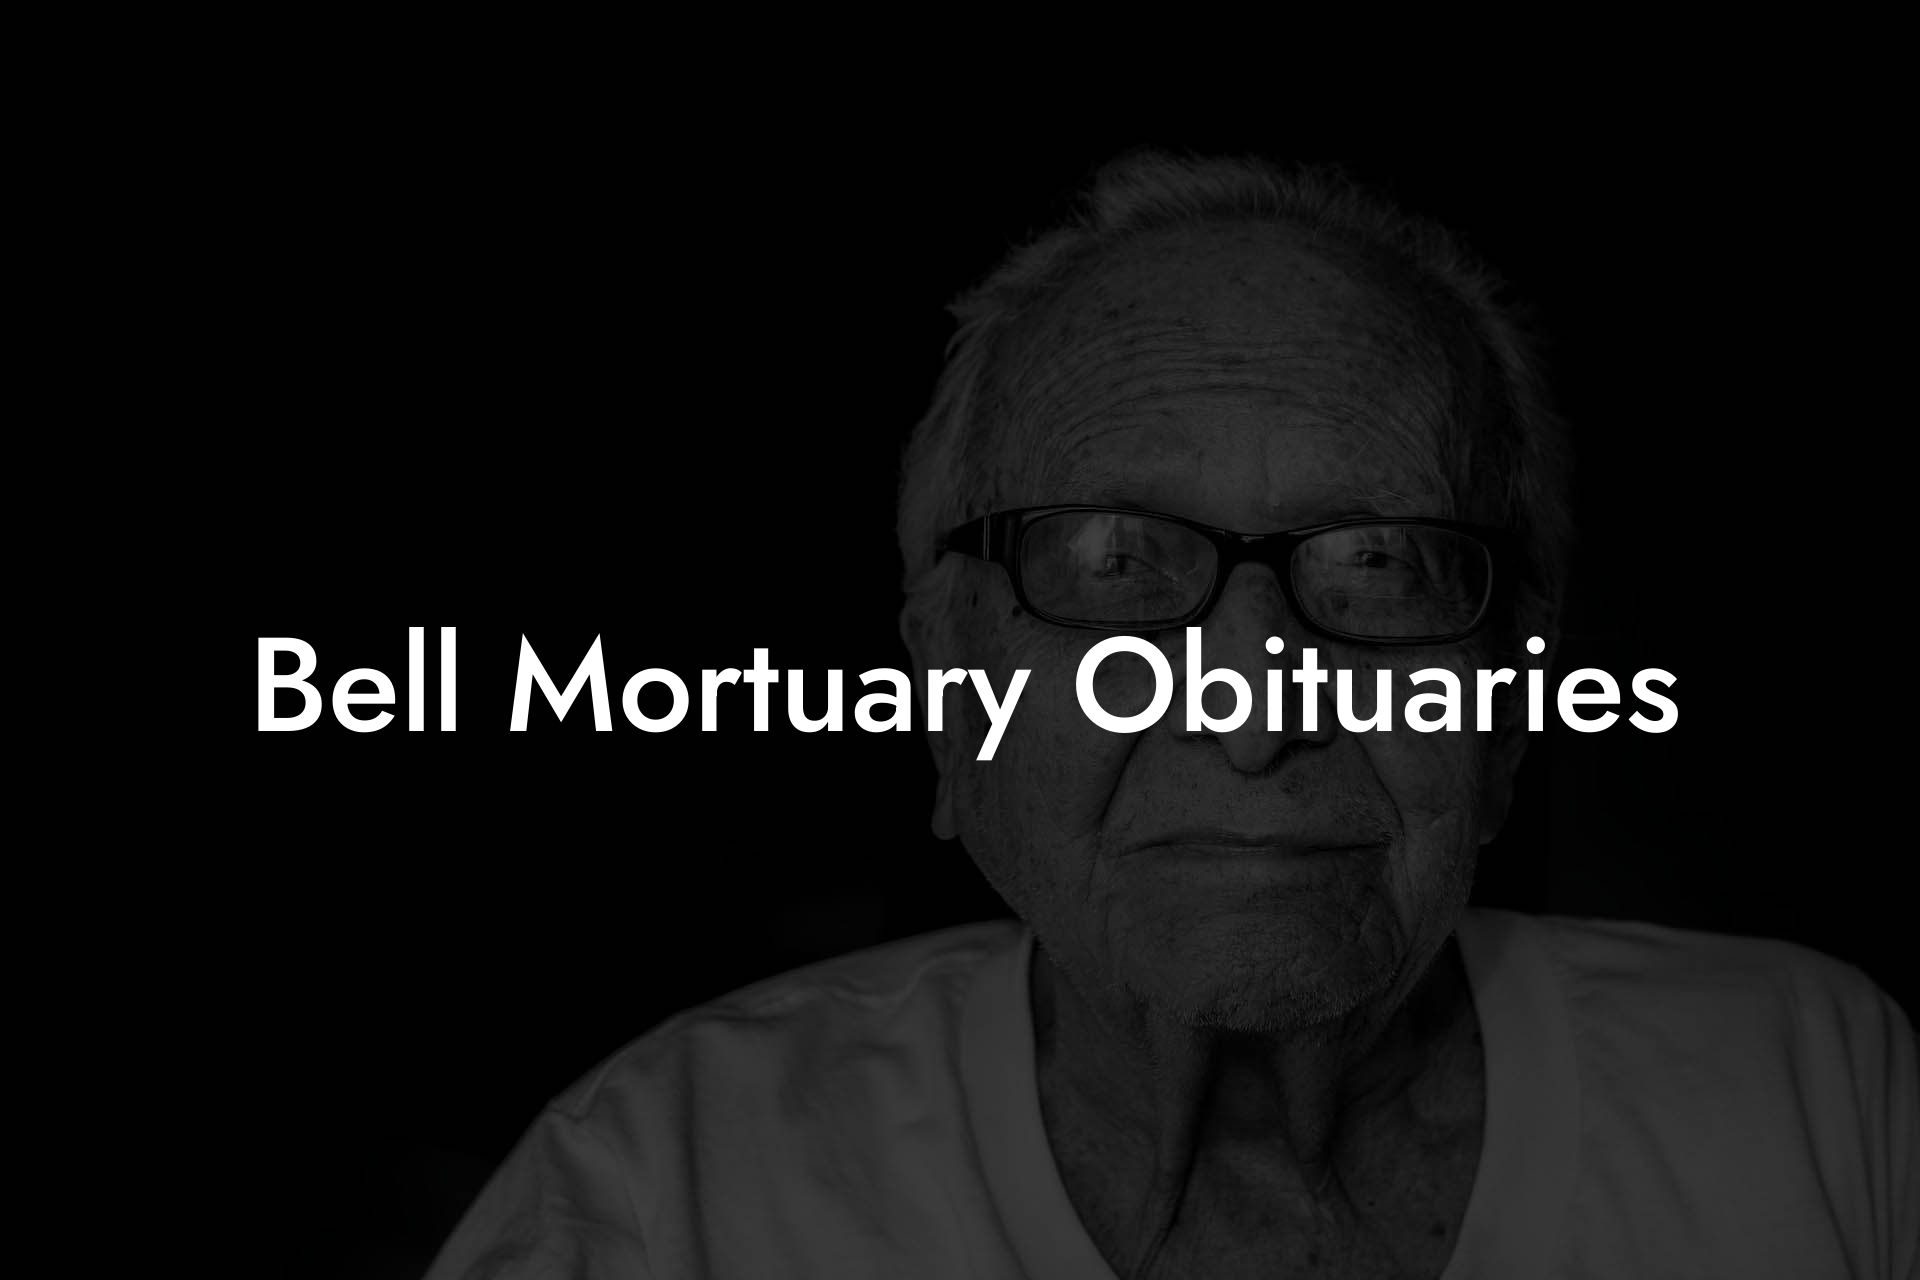 Bell Mortuary Obituaries